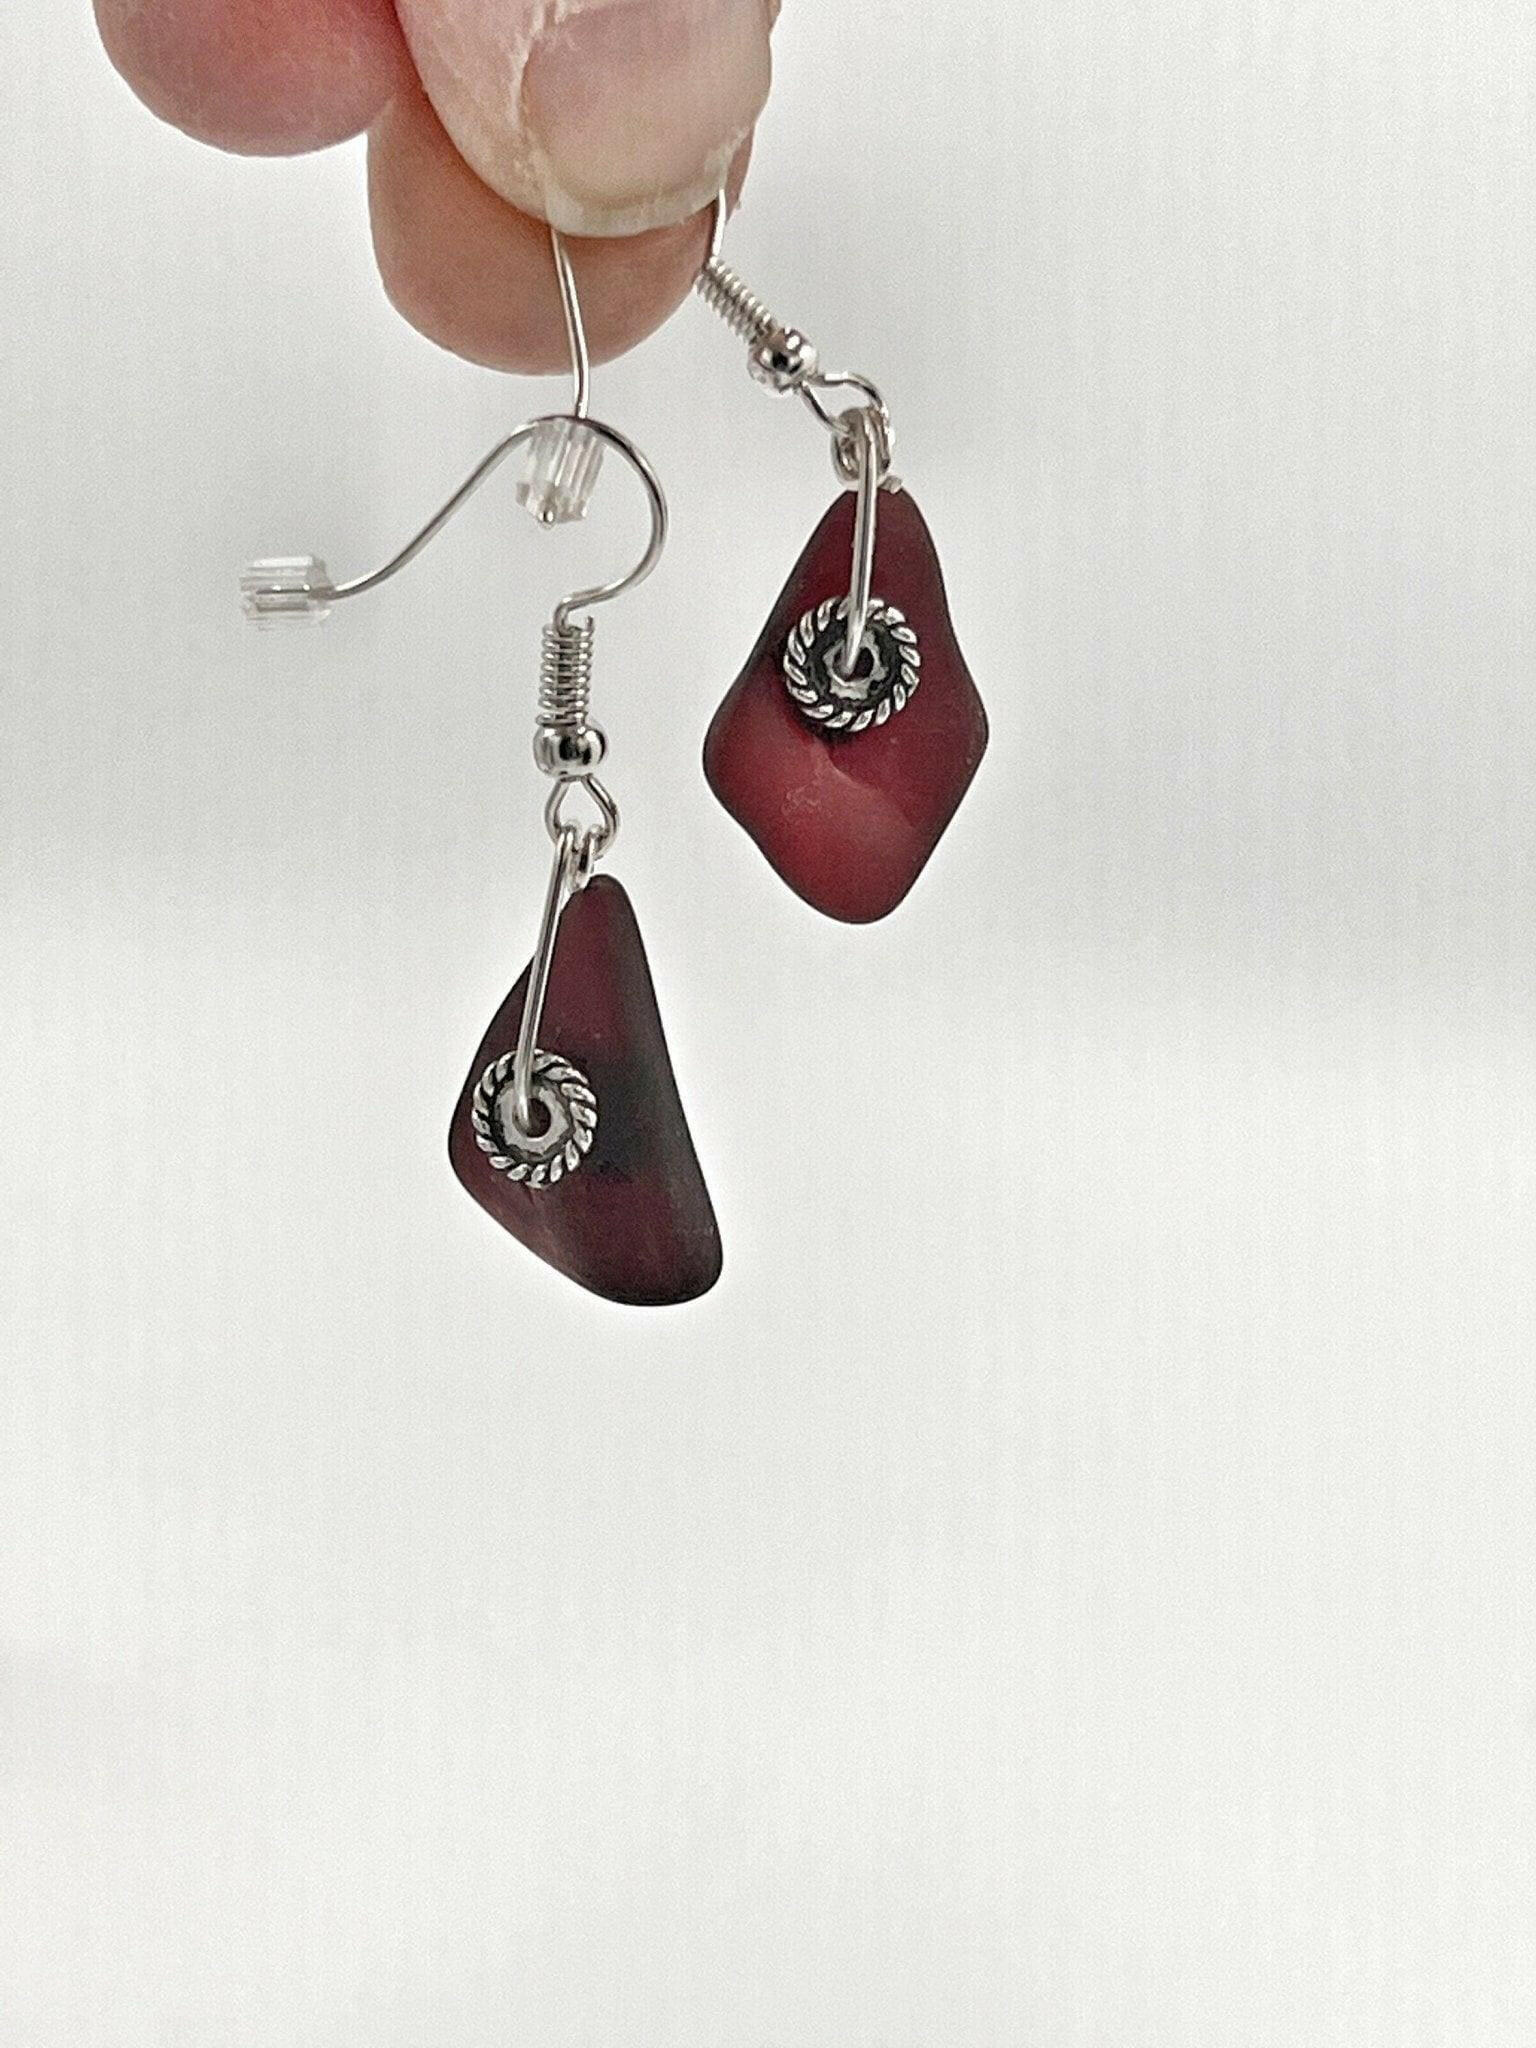 Bec Sue Jewelry Shop earrings red / 1 inch / red glass/earring wire Dangling Sea Glass Earrings Tags 440